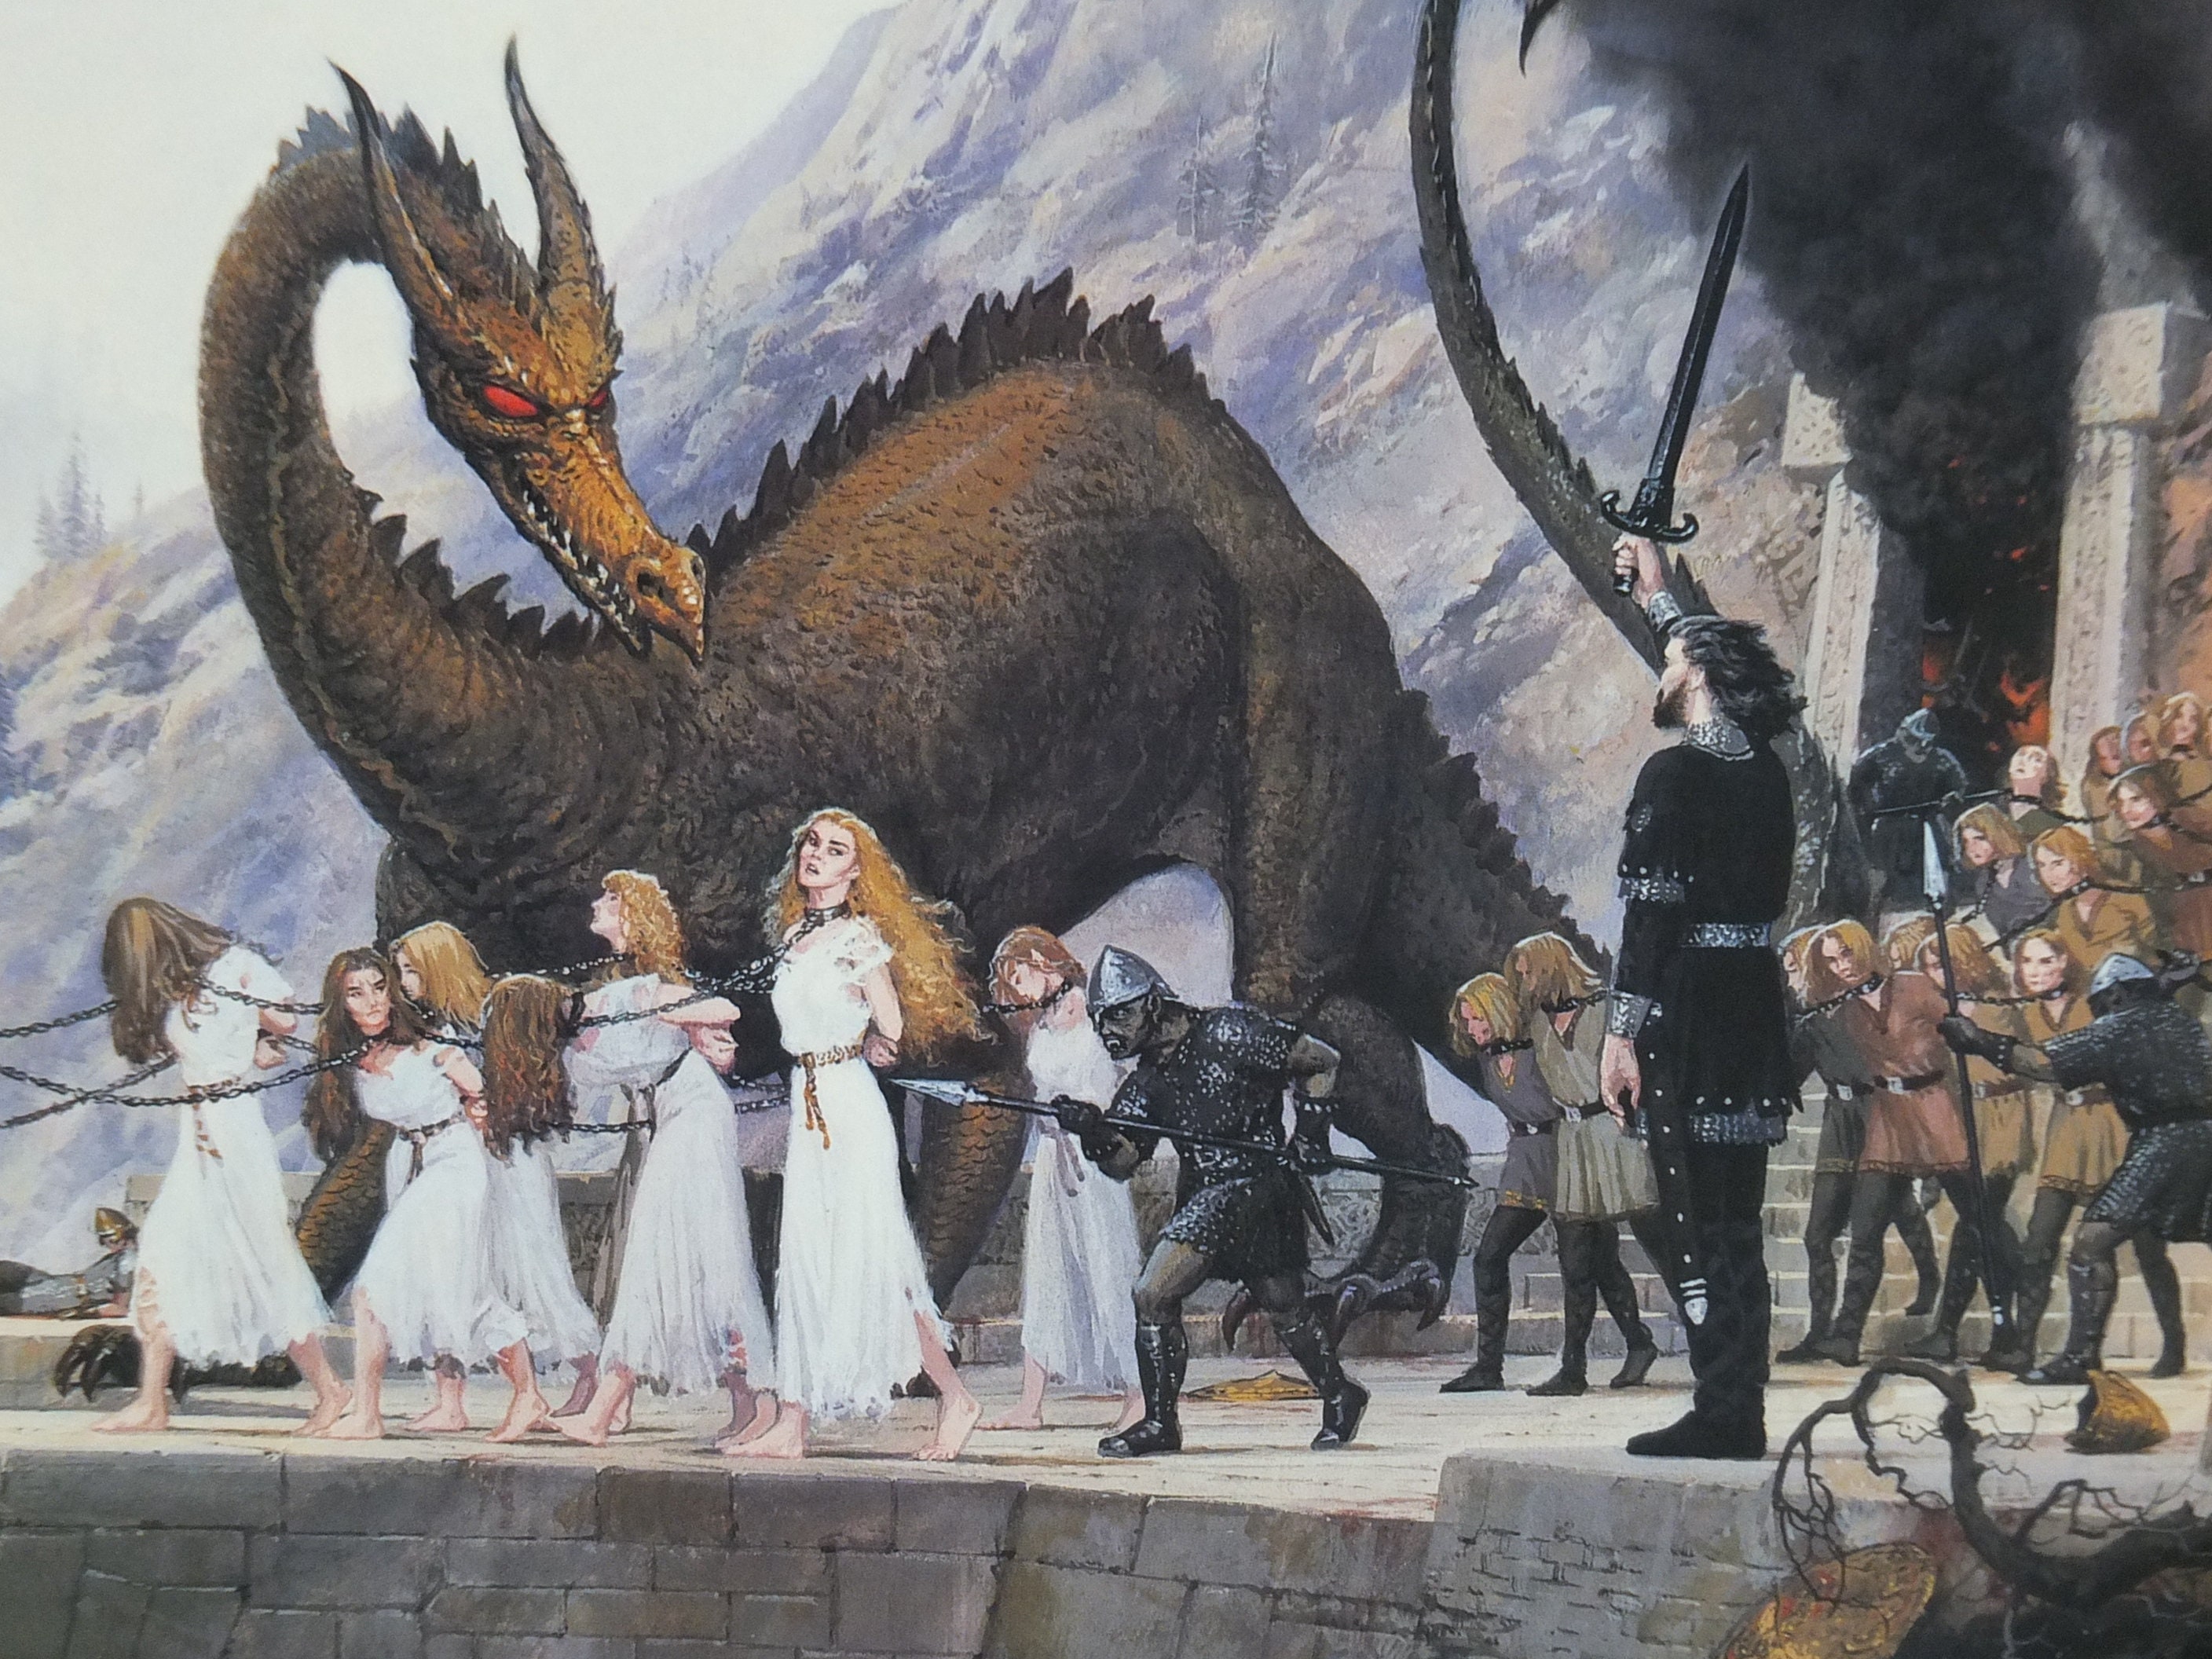 1998 Tolkien Silmarillion Poster the Sack of Nargothrond by 